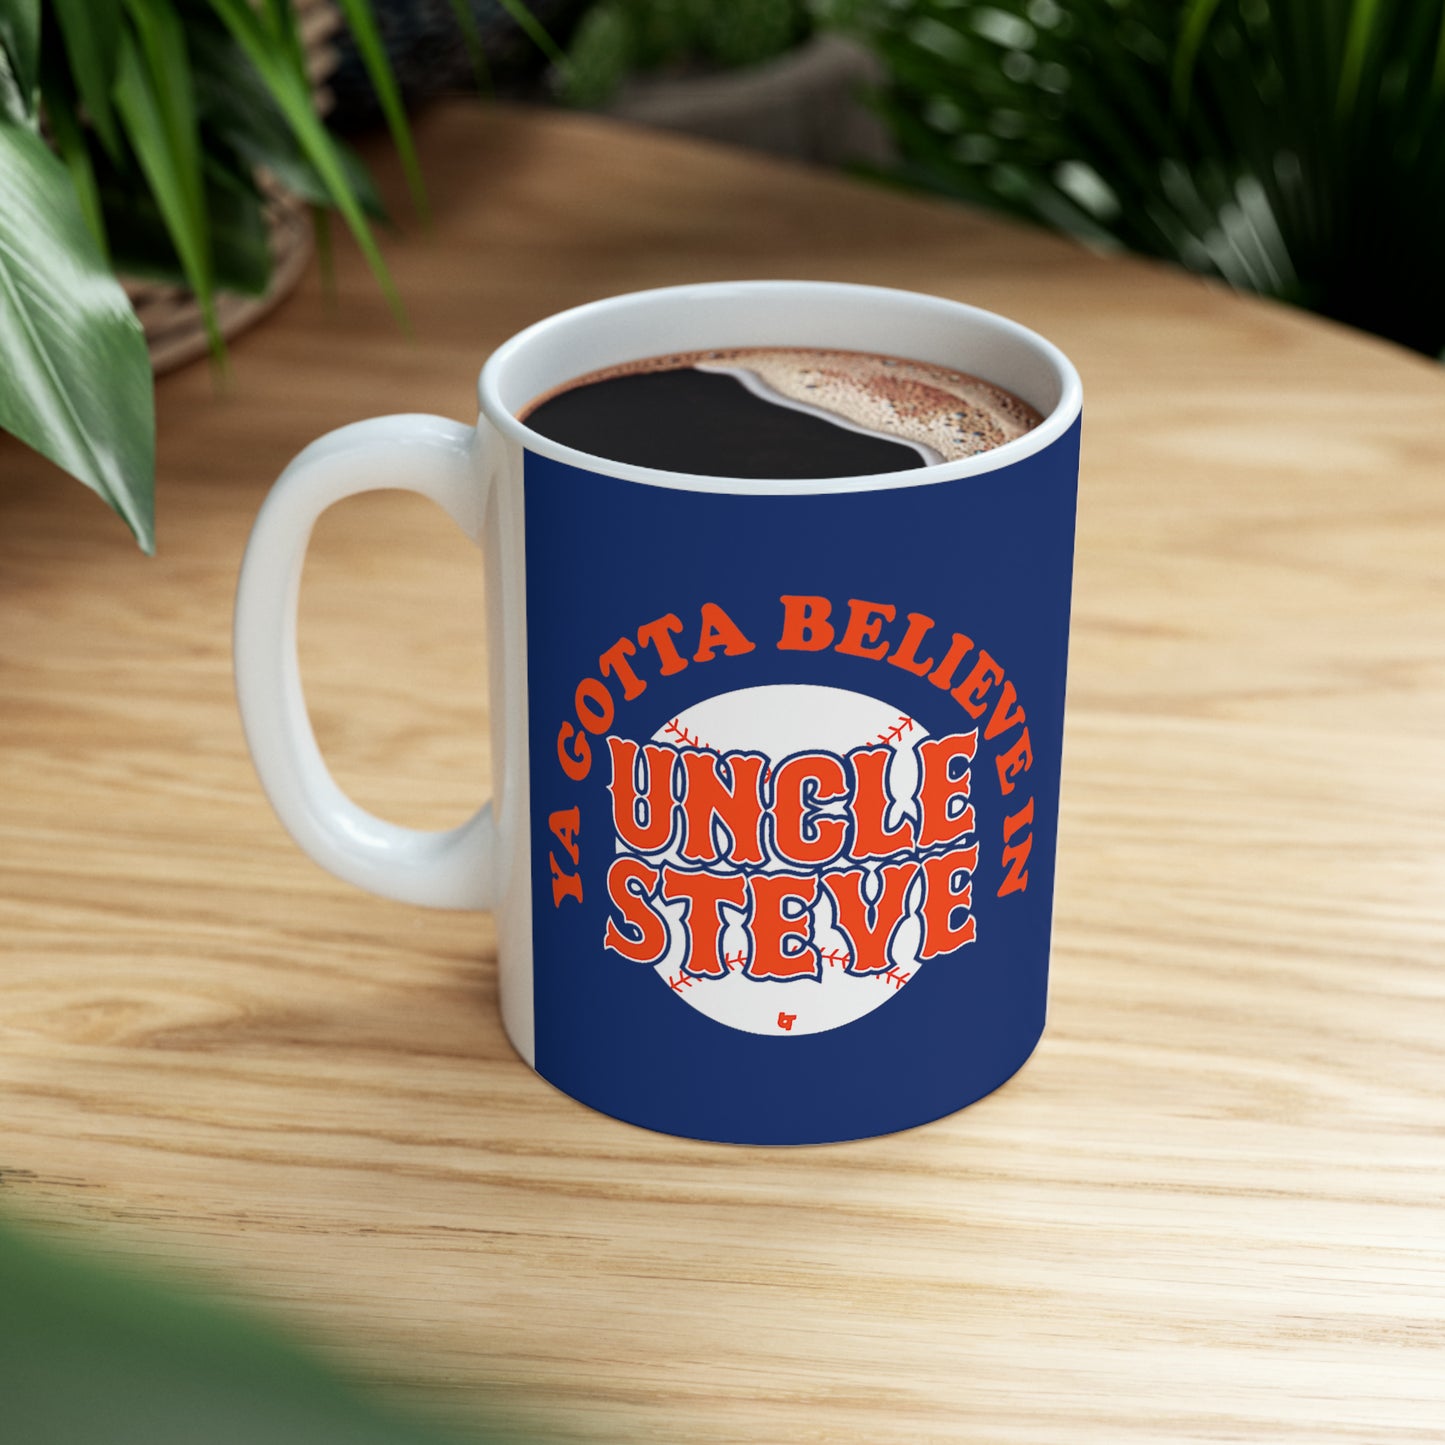 Steve Cohen Mets Owner Tribute 11oz Ceramic Mug - Perfect for New York Mets Fans